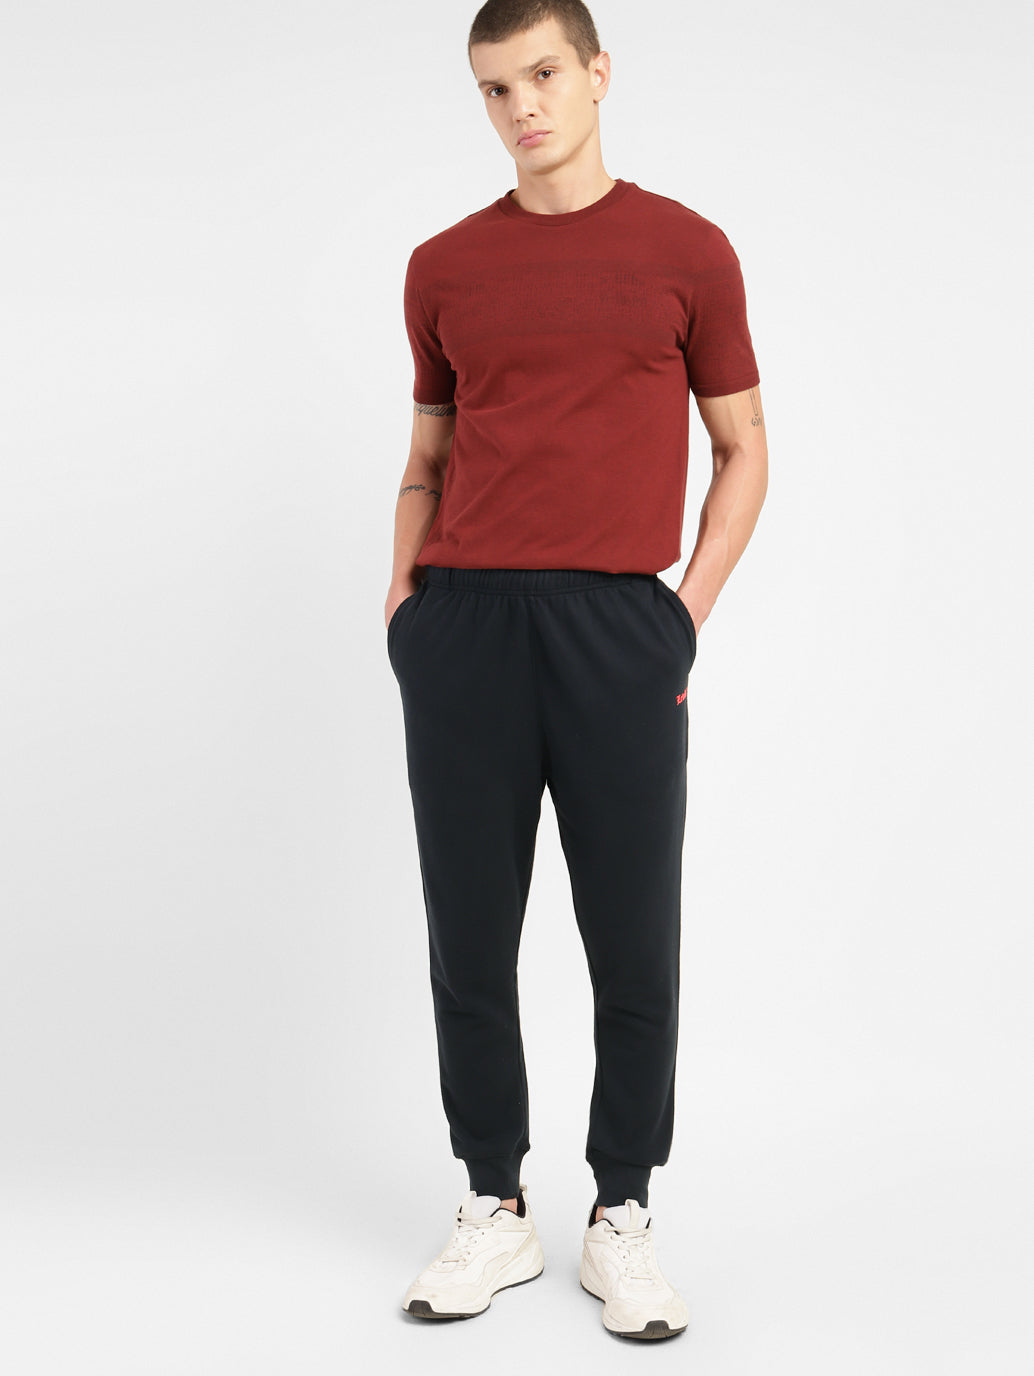 Shop trendy maroon unisex jogger for ultimate comfort & look